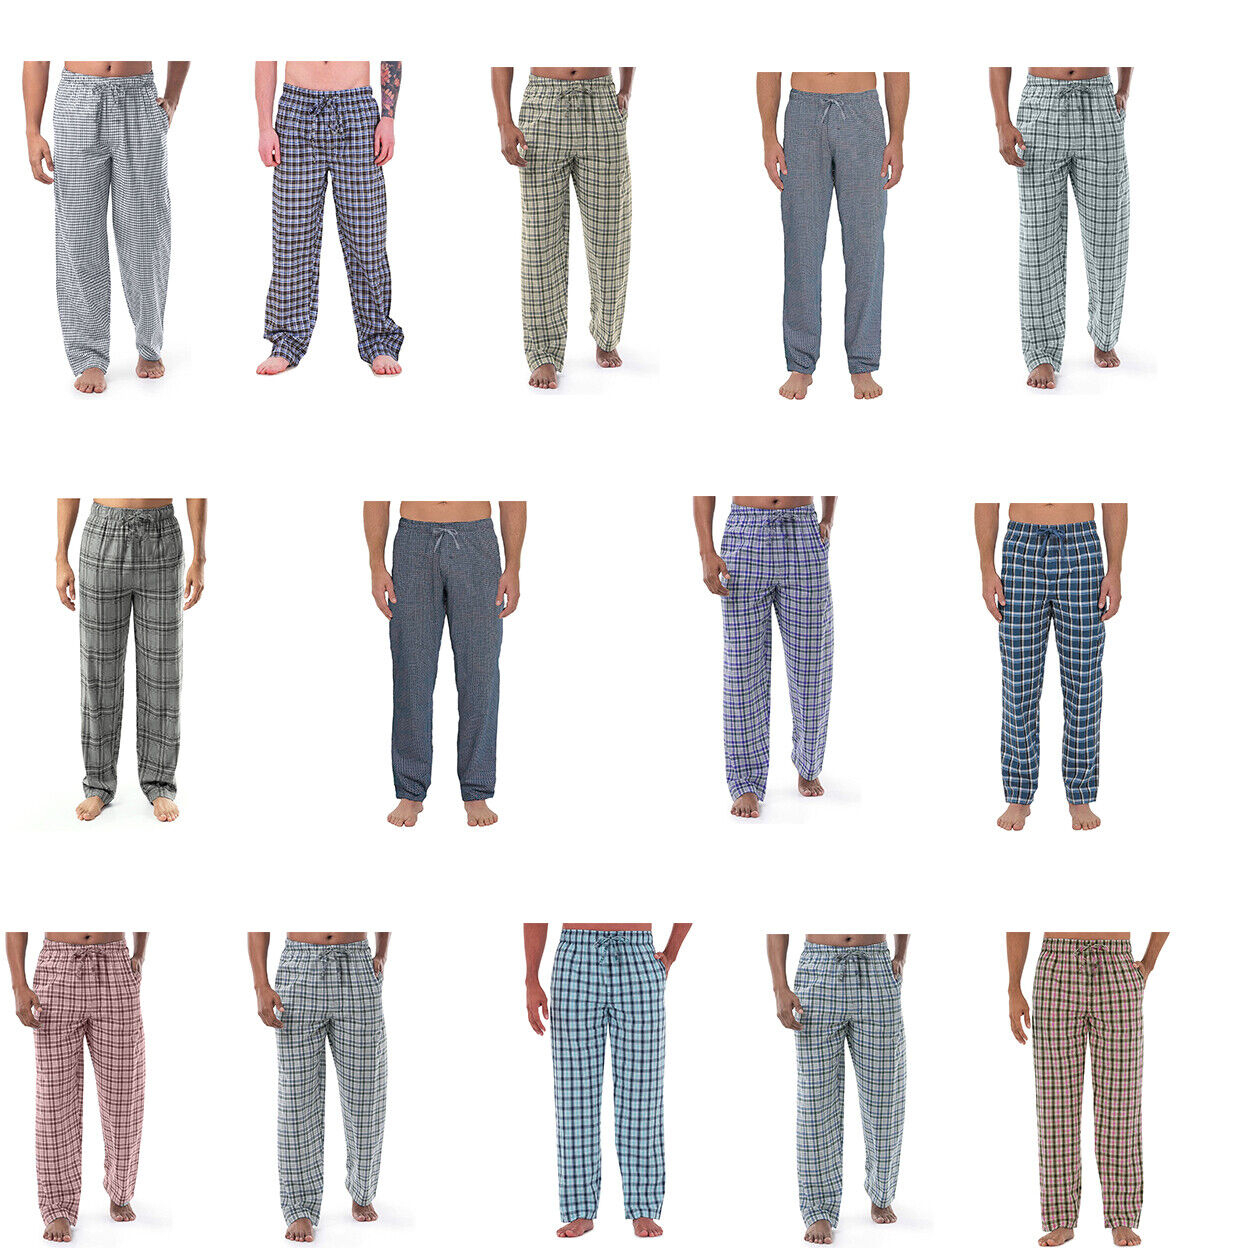 Men's Ultra-Soft Plaid Cotton Jersey Knit Comfy Sleep Lounge Pajama Pants - Blue, Small